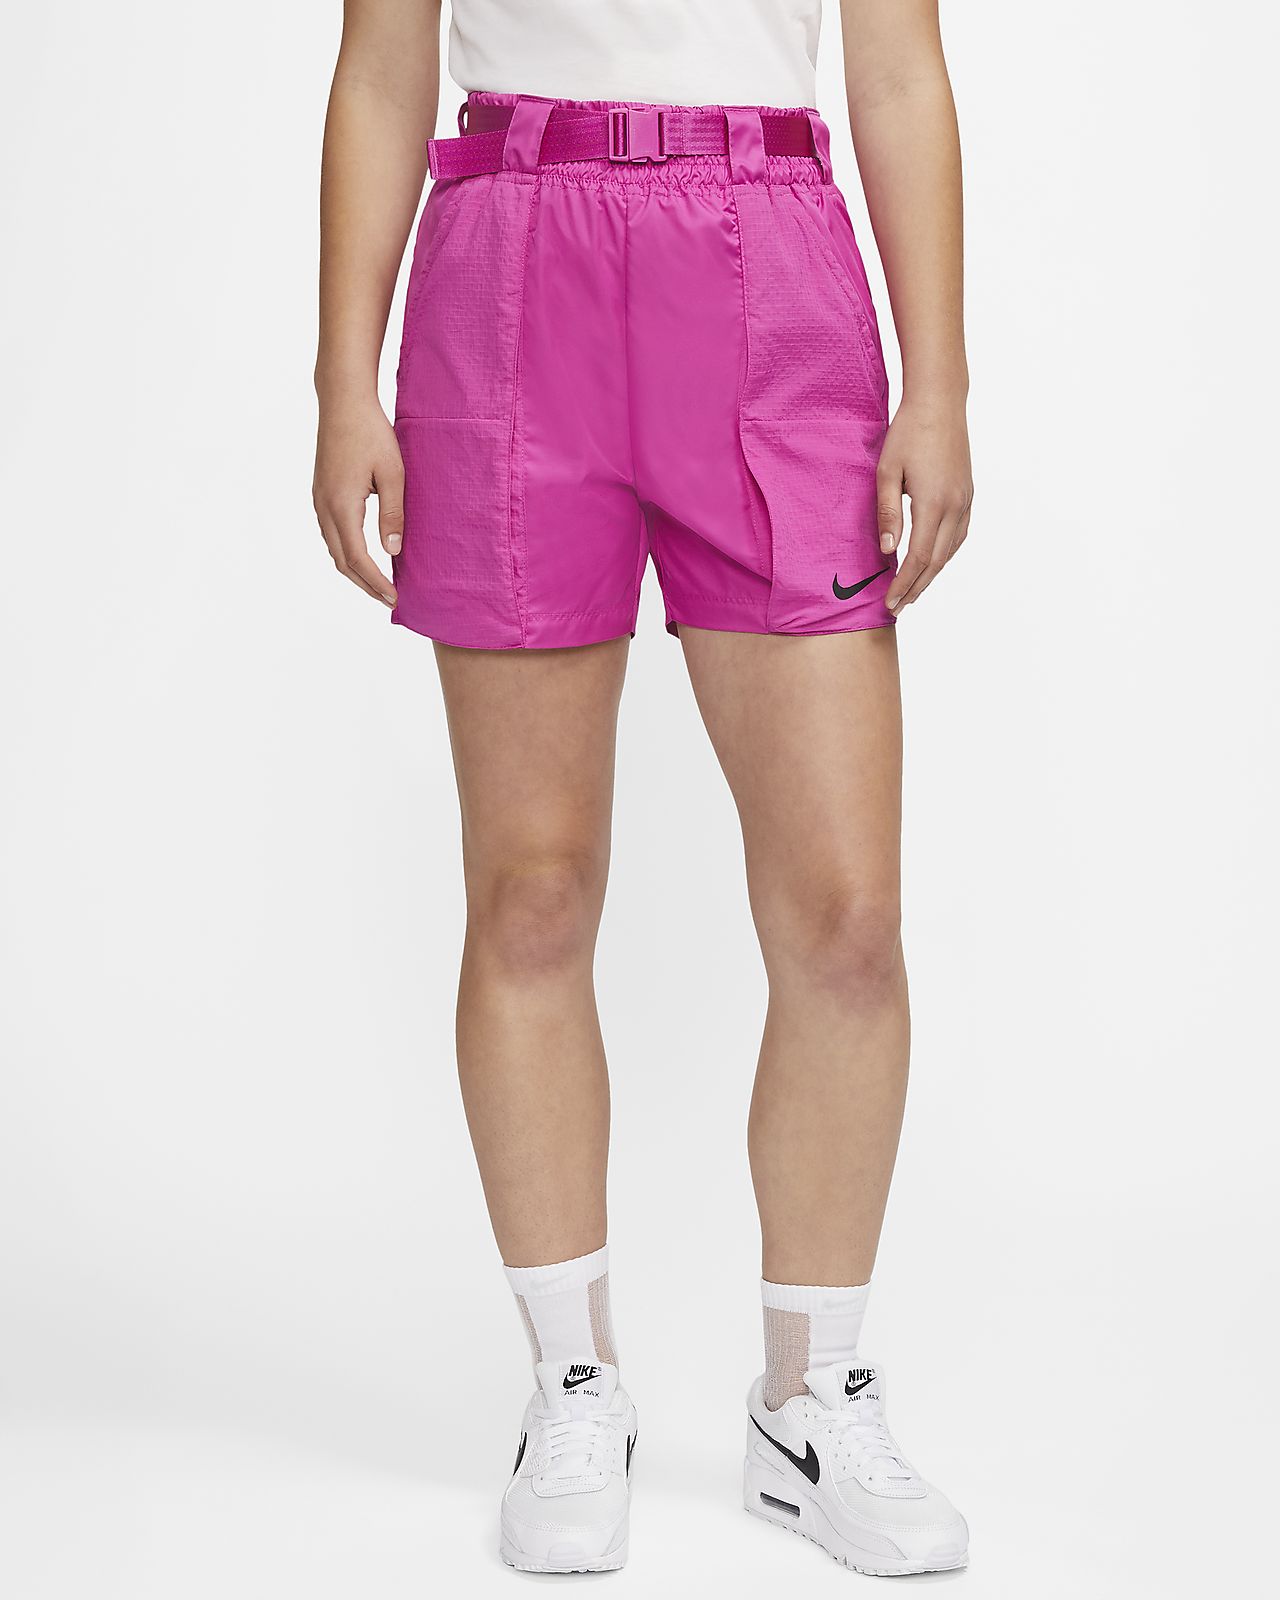 nike woven shorts pink cheap online